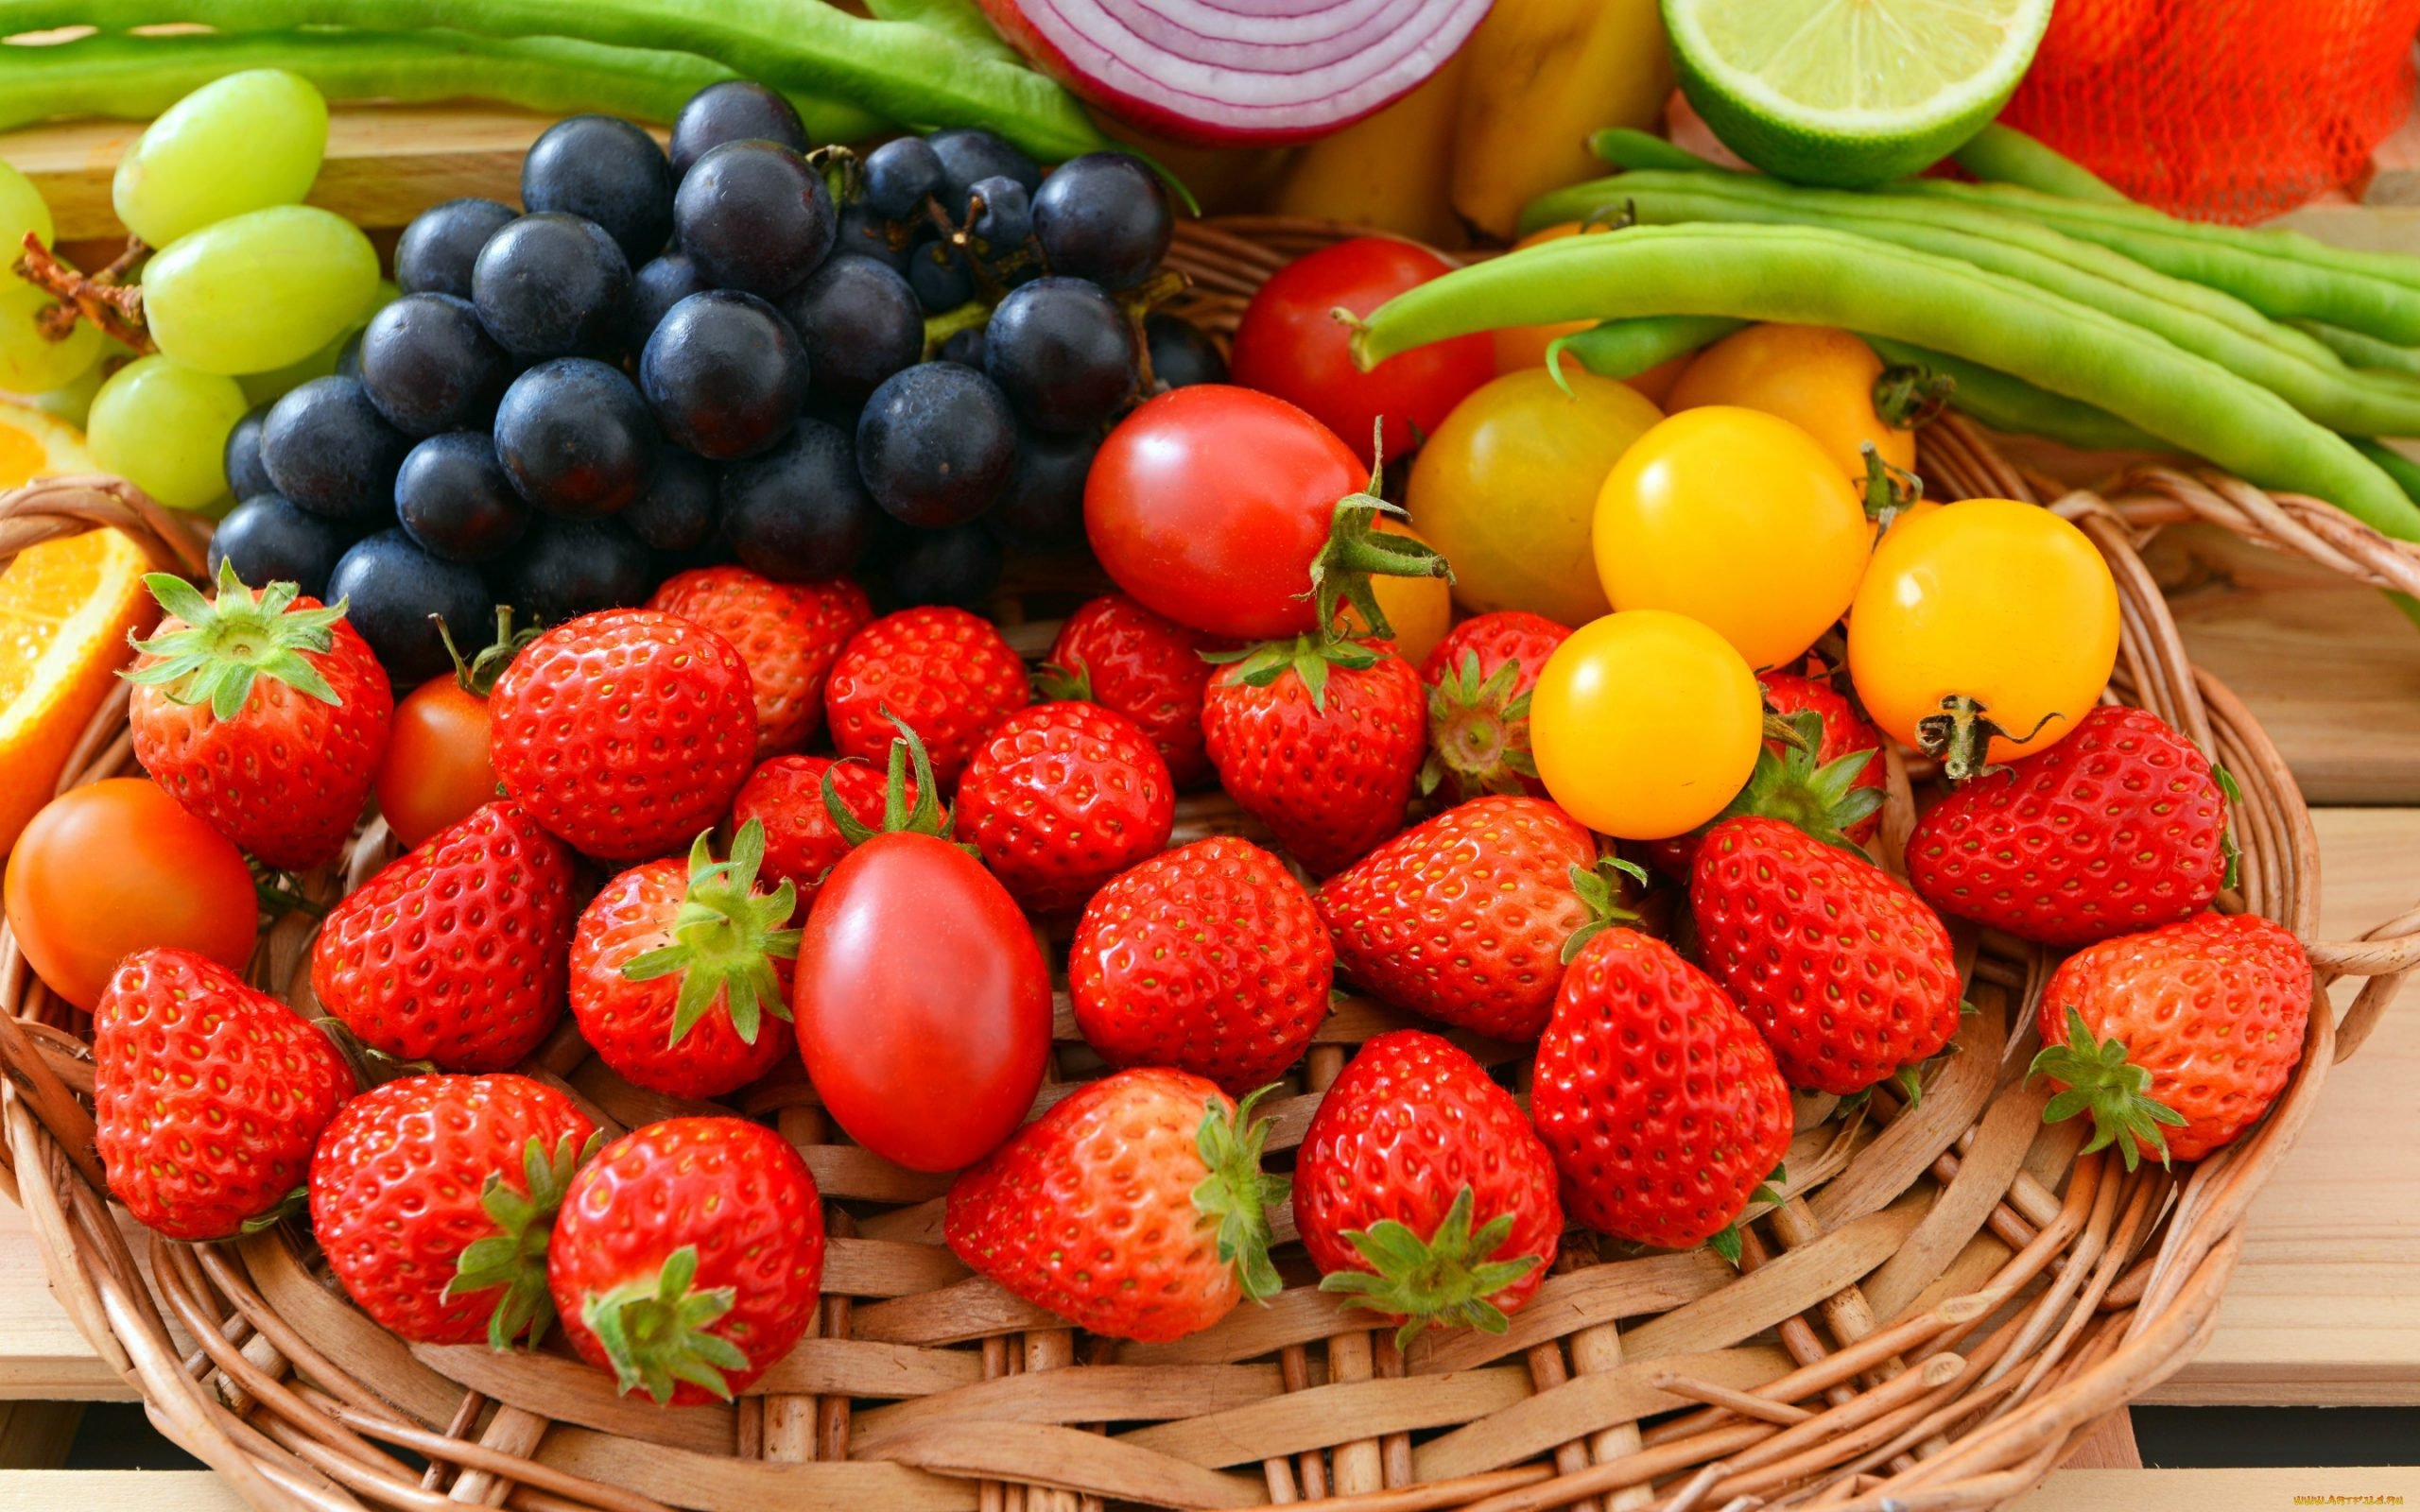 И овощ и ягода 4. Овощи и фрукты. Овощи, фрукты, ягоды. Фрукты и ягоды. Свежие овощи и фрукты.